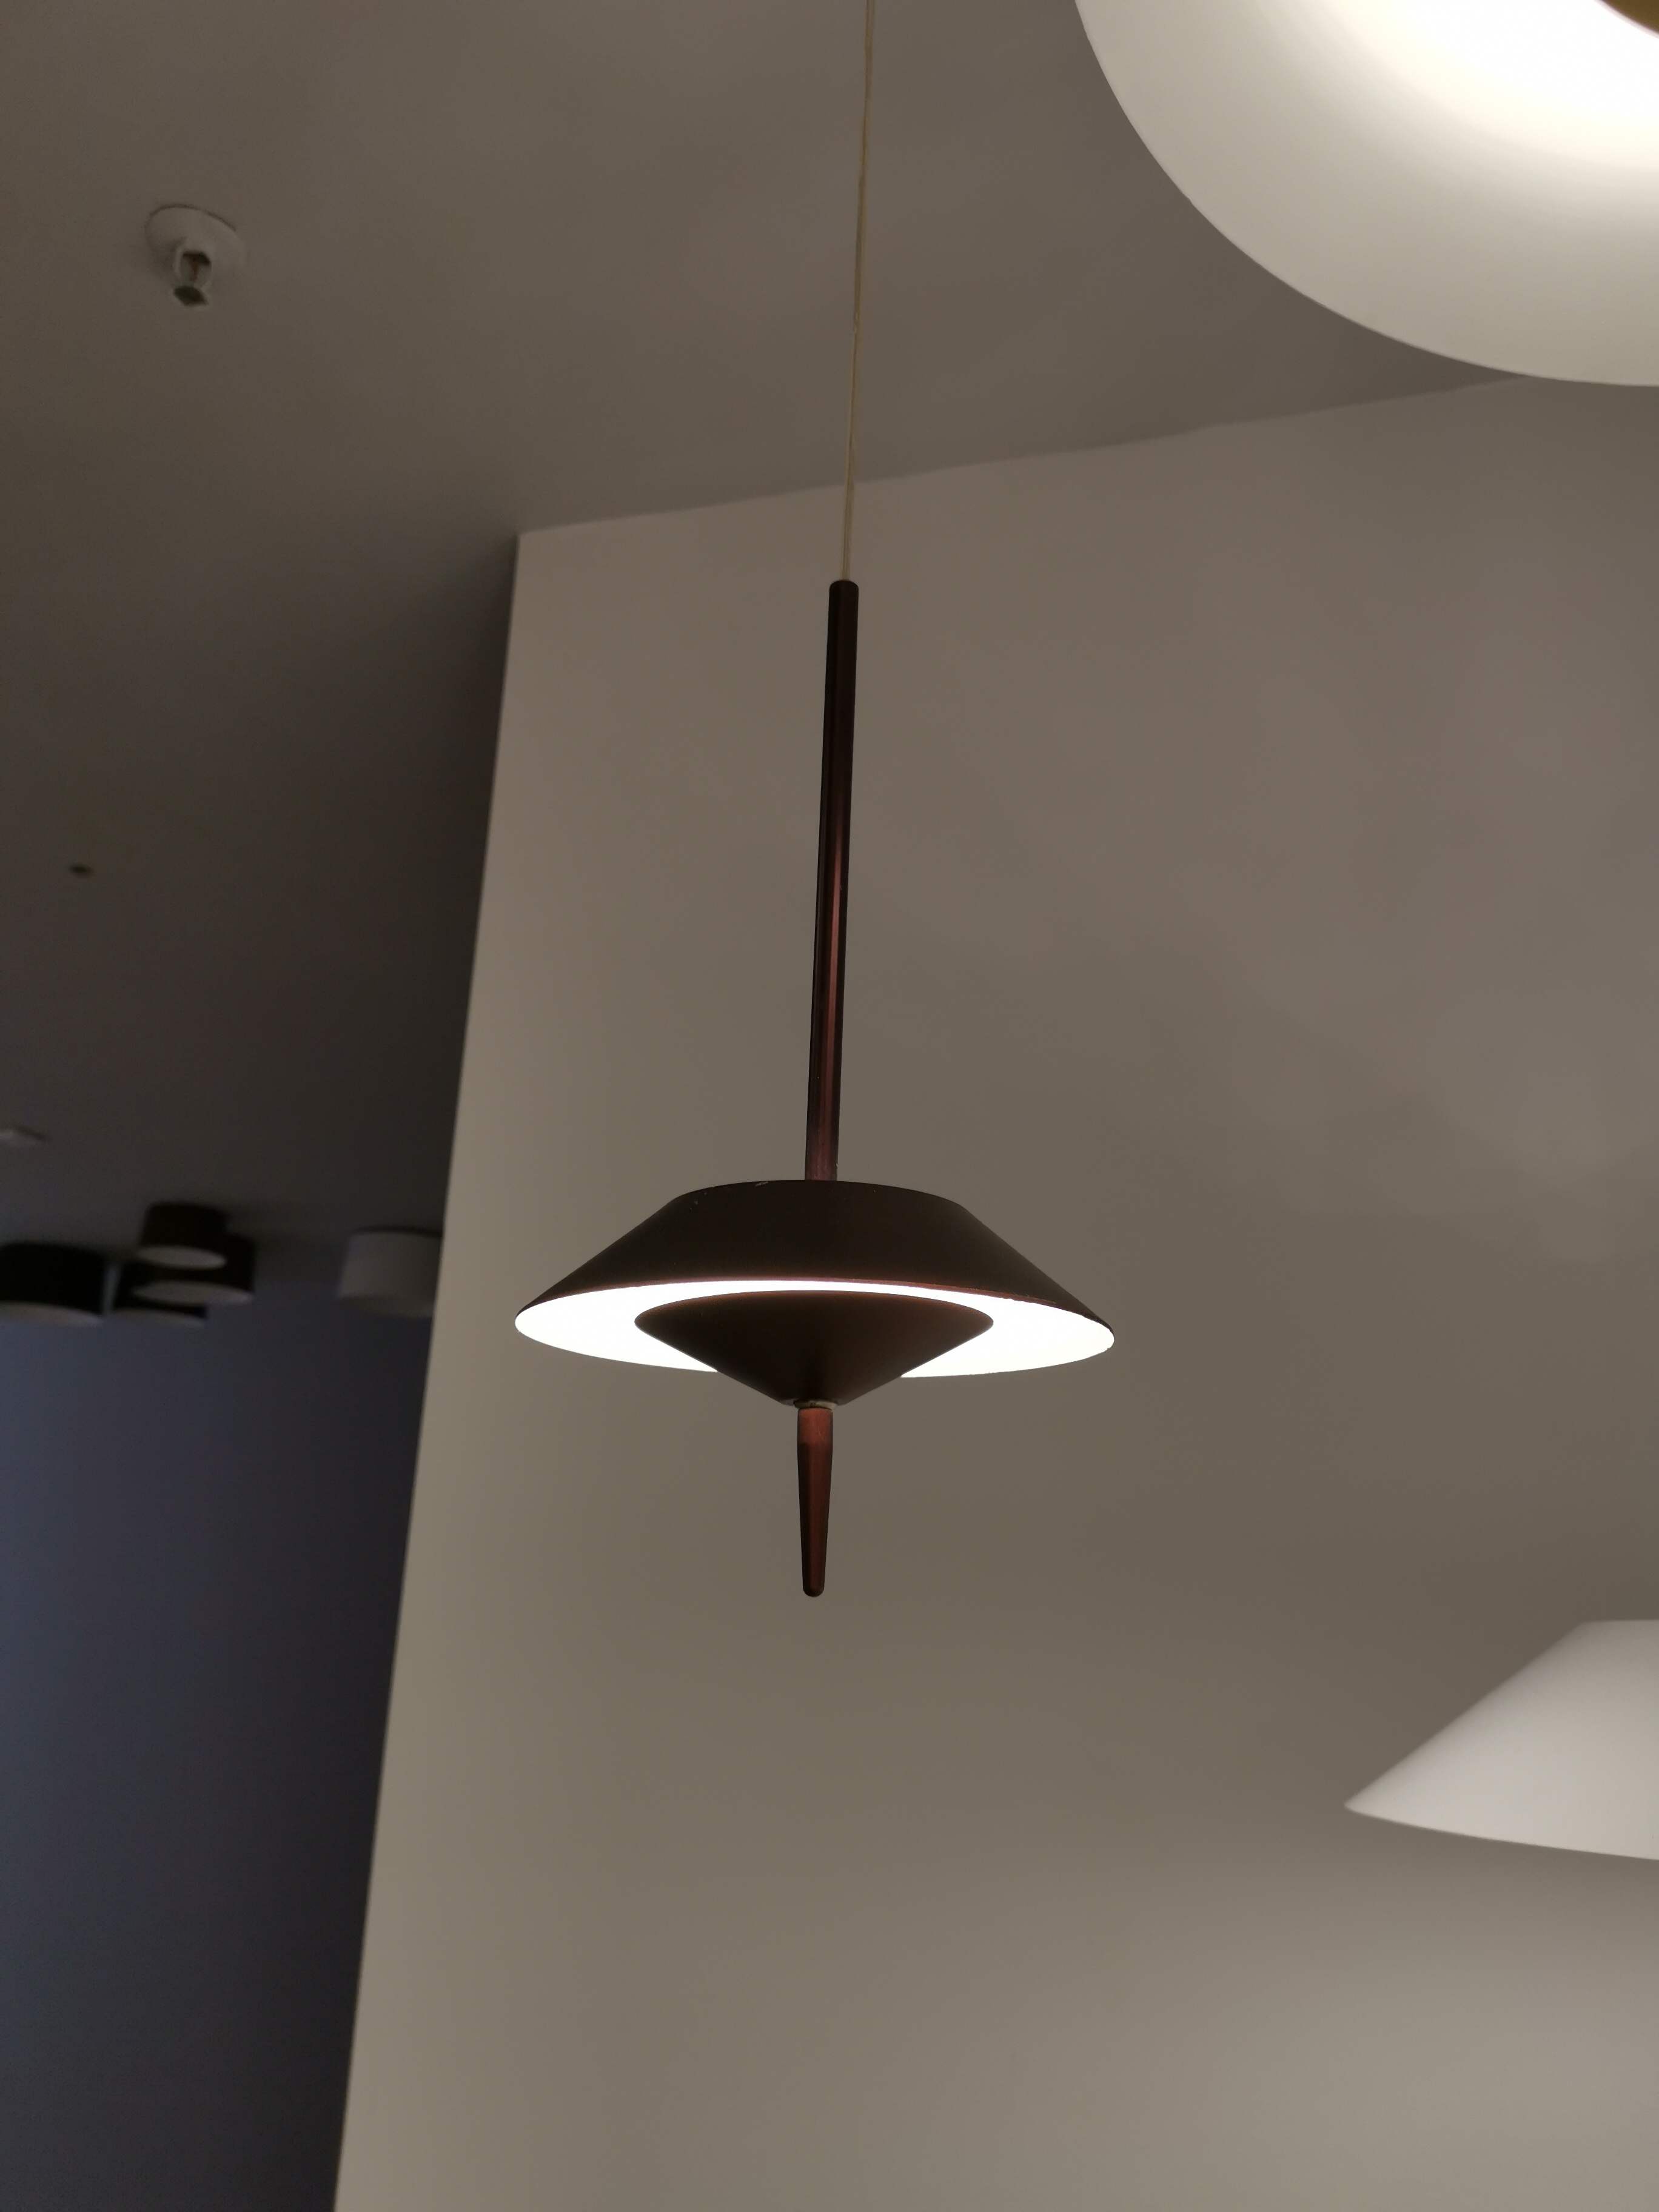 Modern Home Decorative LED Ceiling Lamp (KA802/SX)